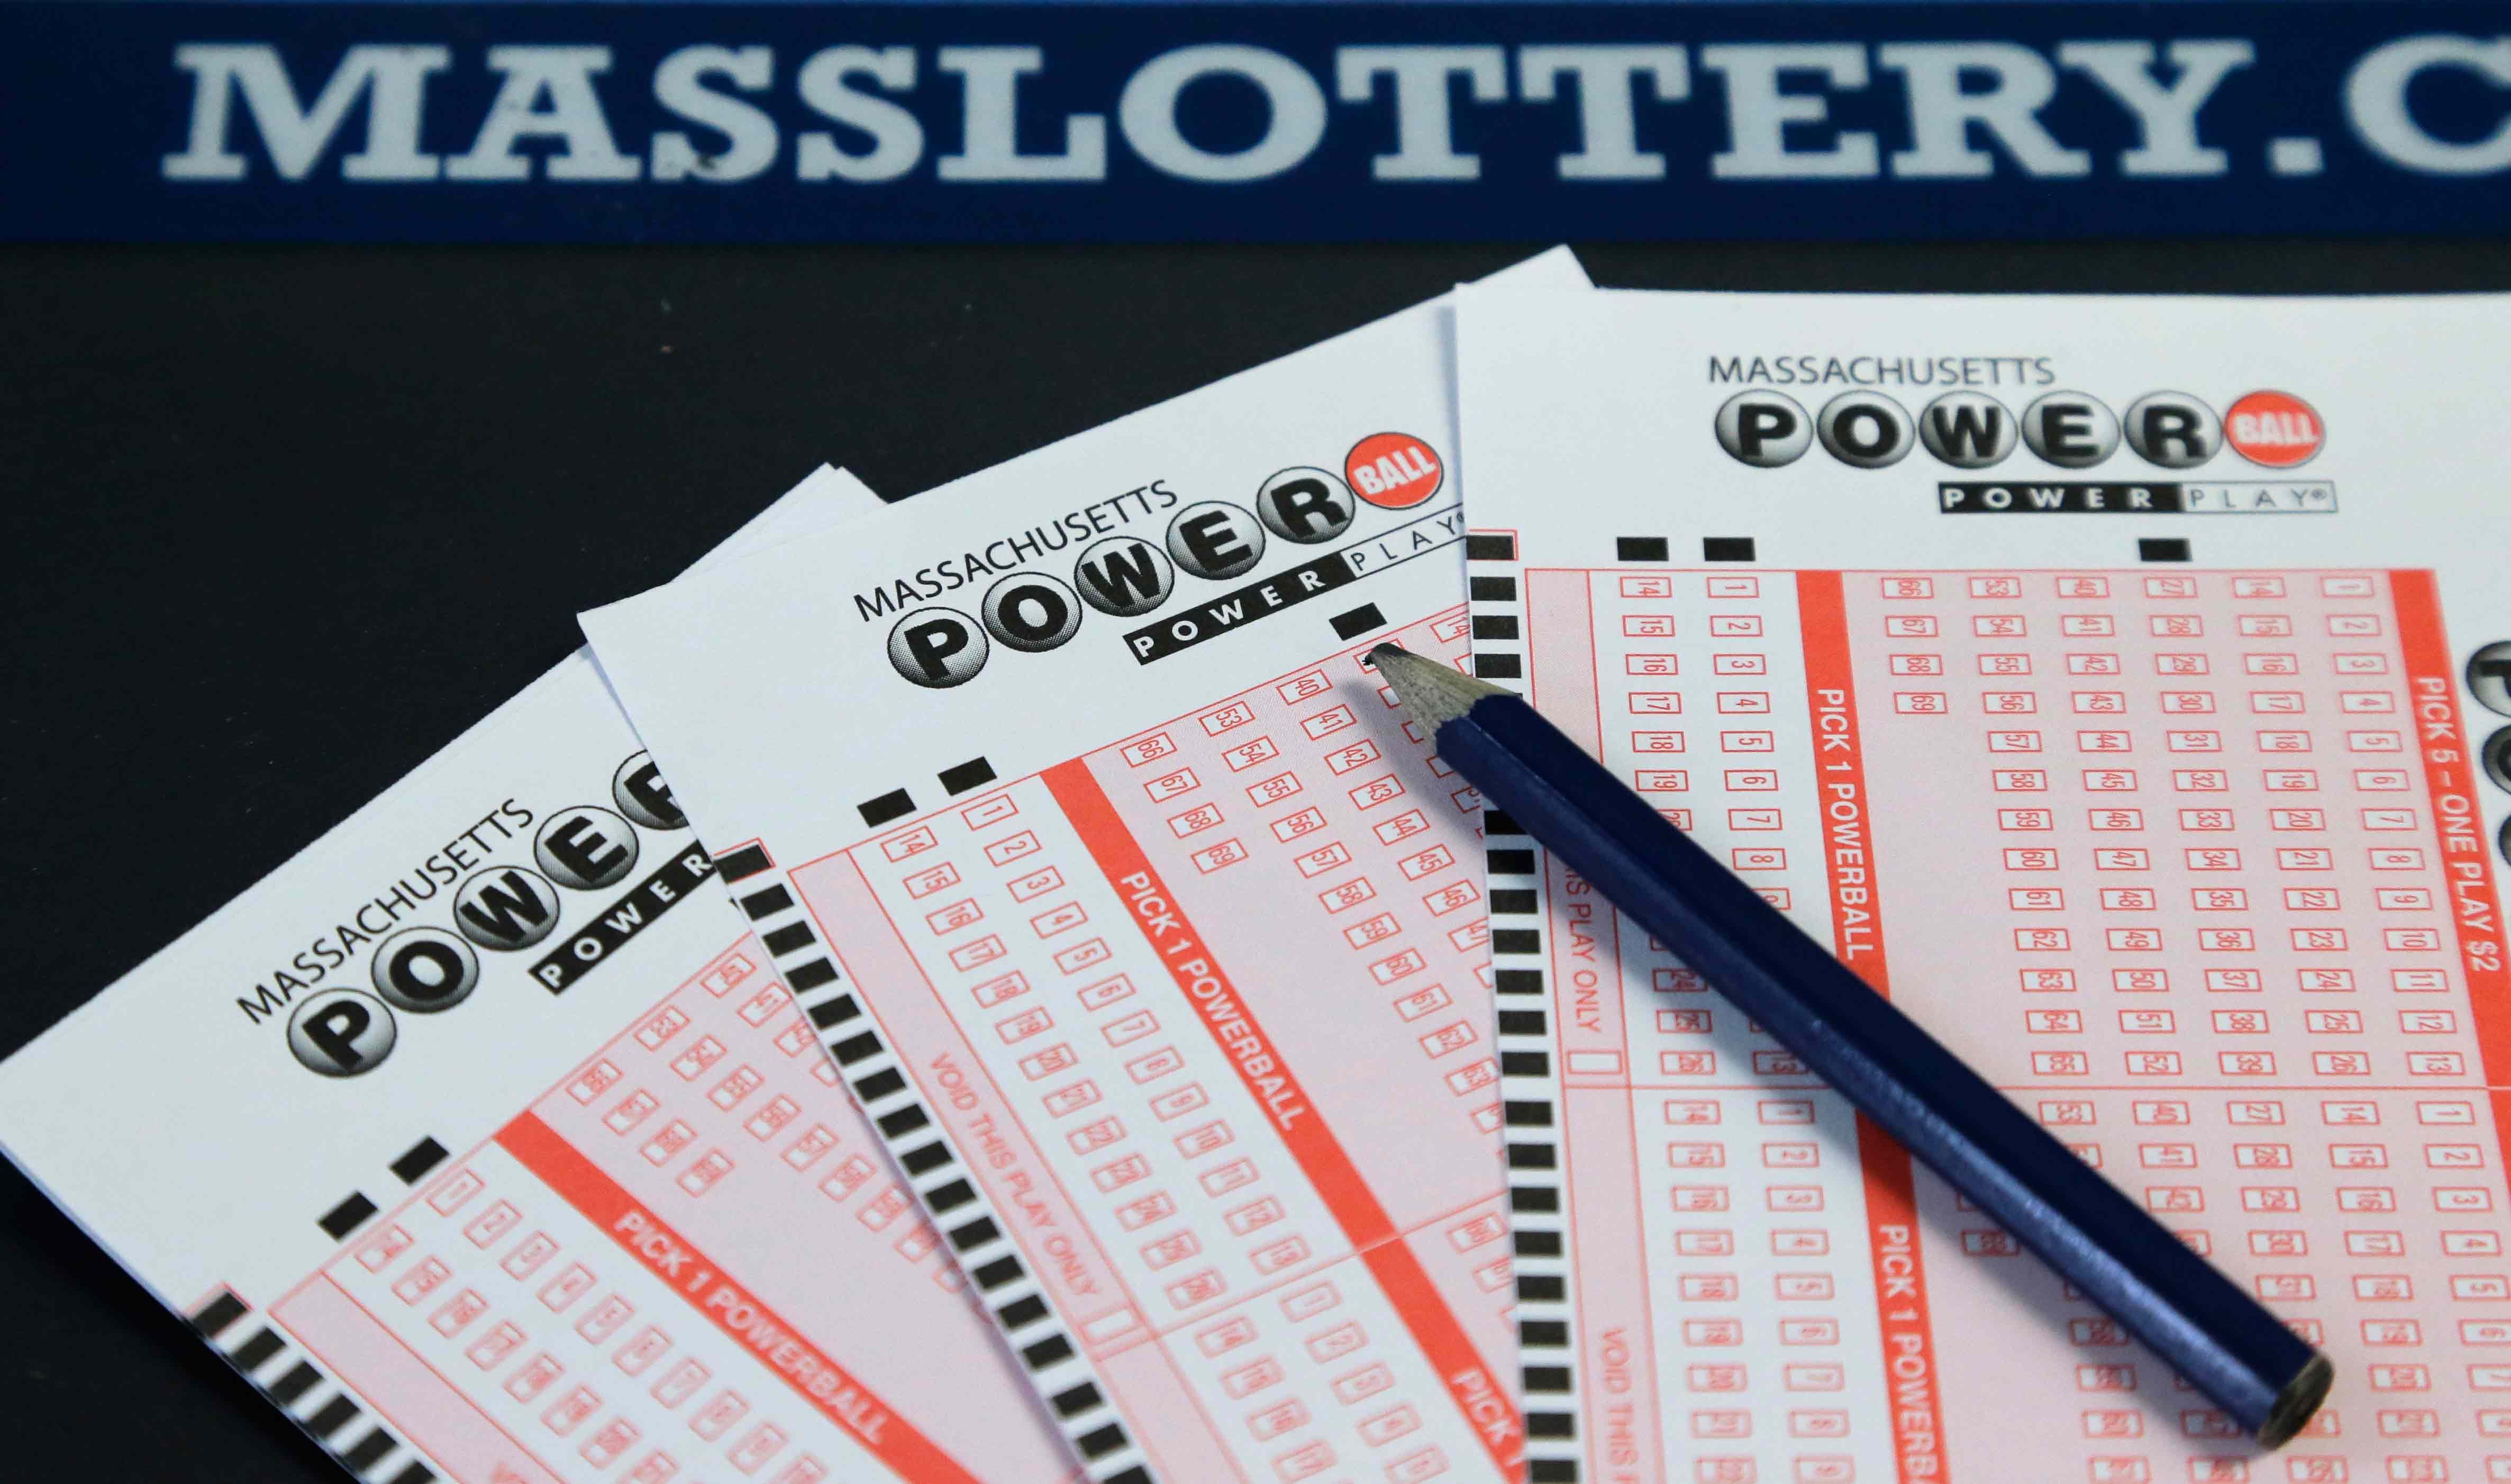 Loteria americana Powerball sorteia prêmio de R$ 3,5 bilhões neste sábado